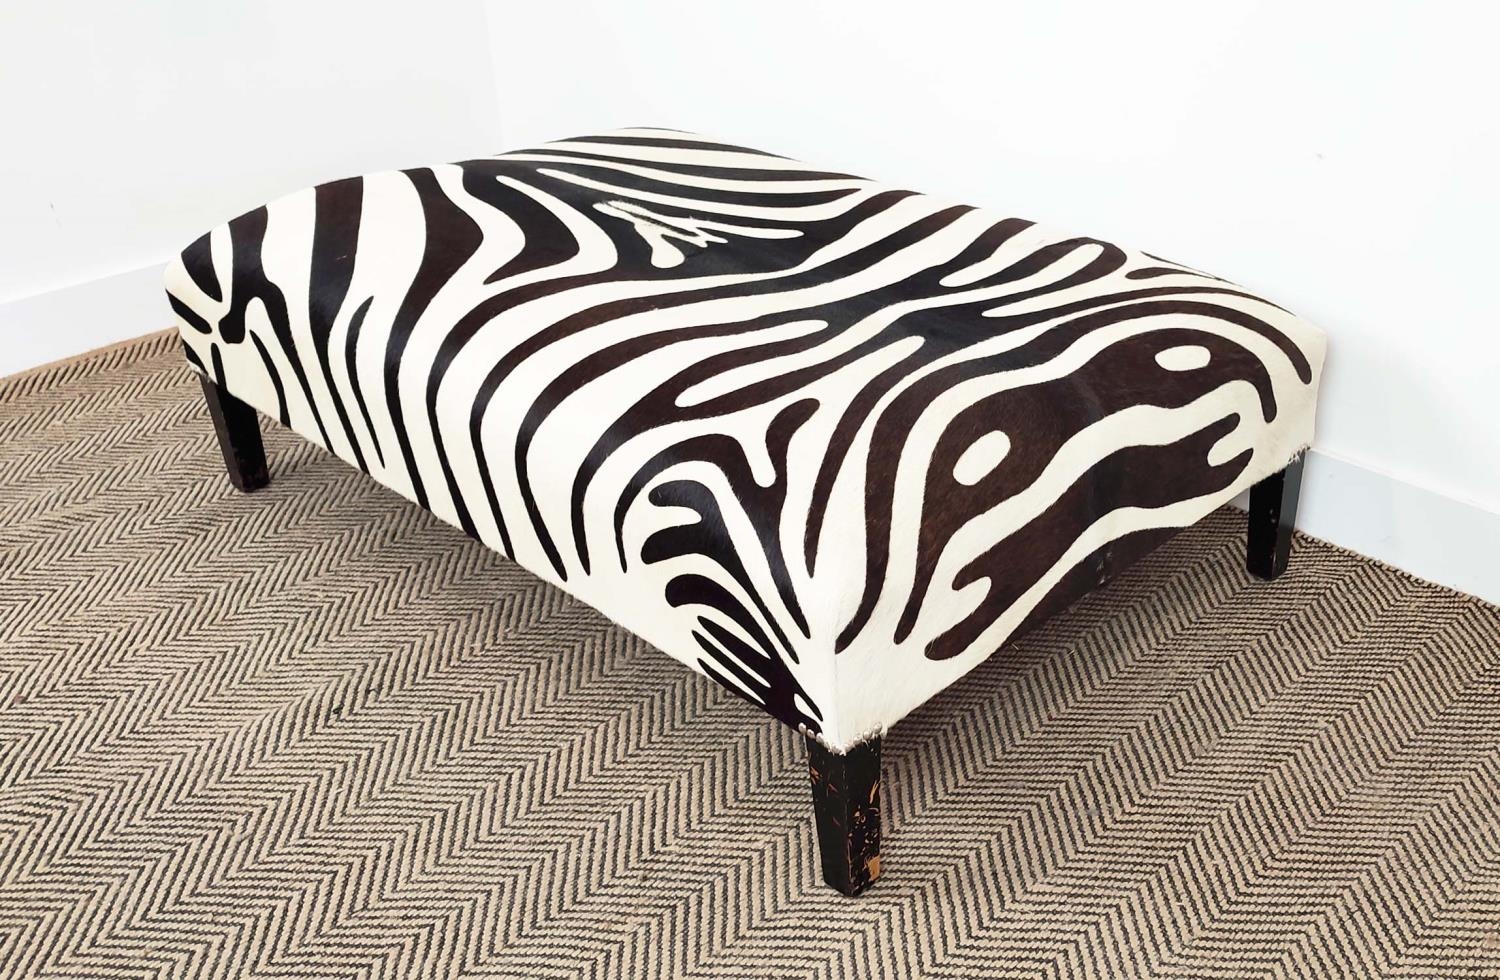 HEARTH STOOL, rectangular zebra skin on ebonised legs, 40cm H x 120cm x 76cm. - Image 4 of 14